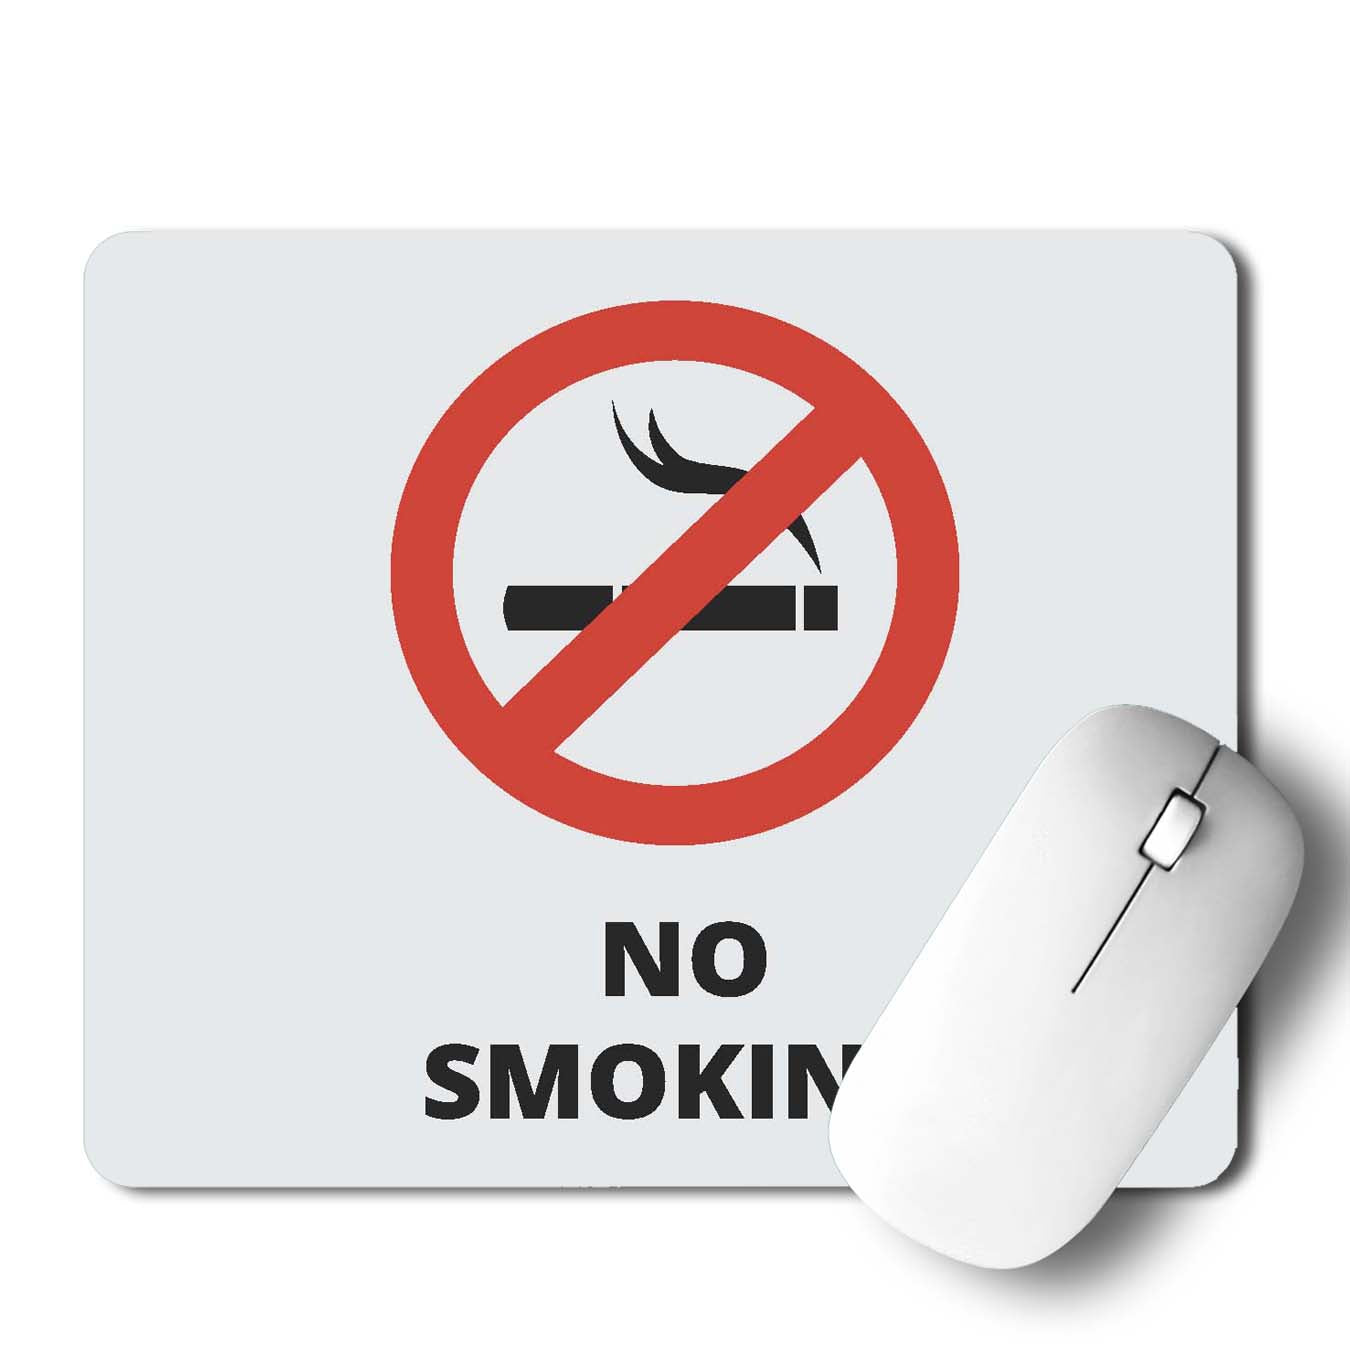 No Smoking Mouse Pad